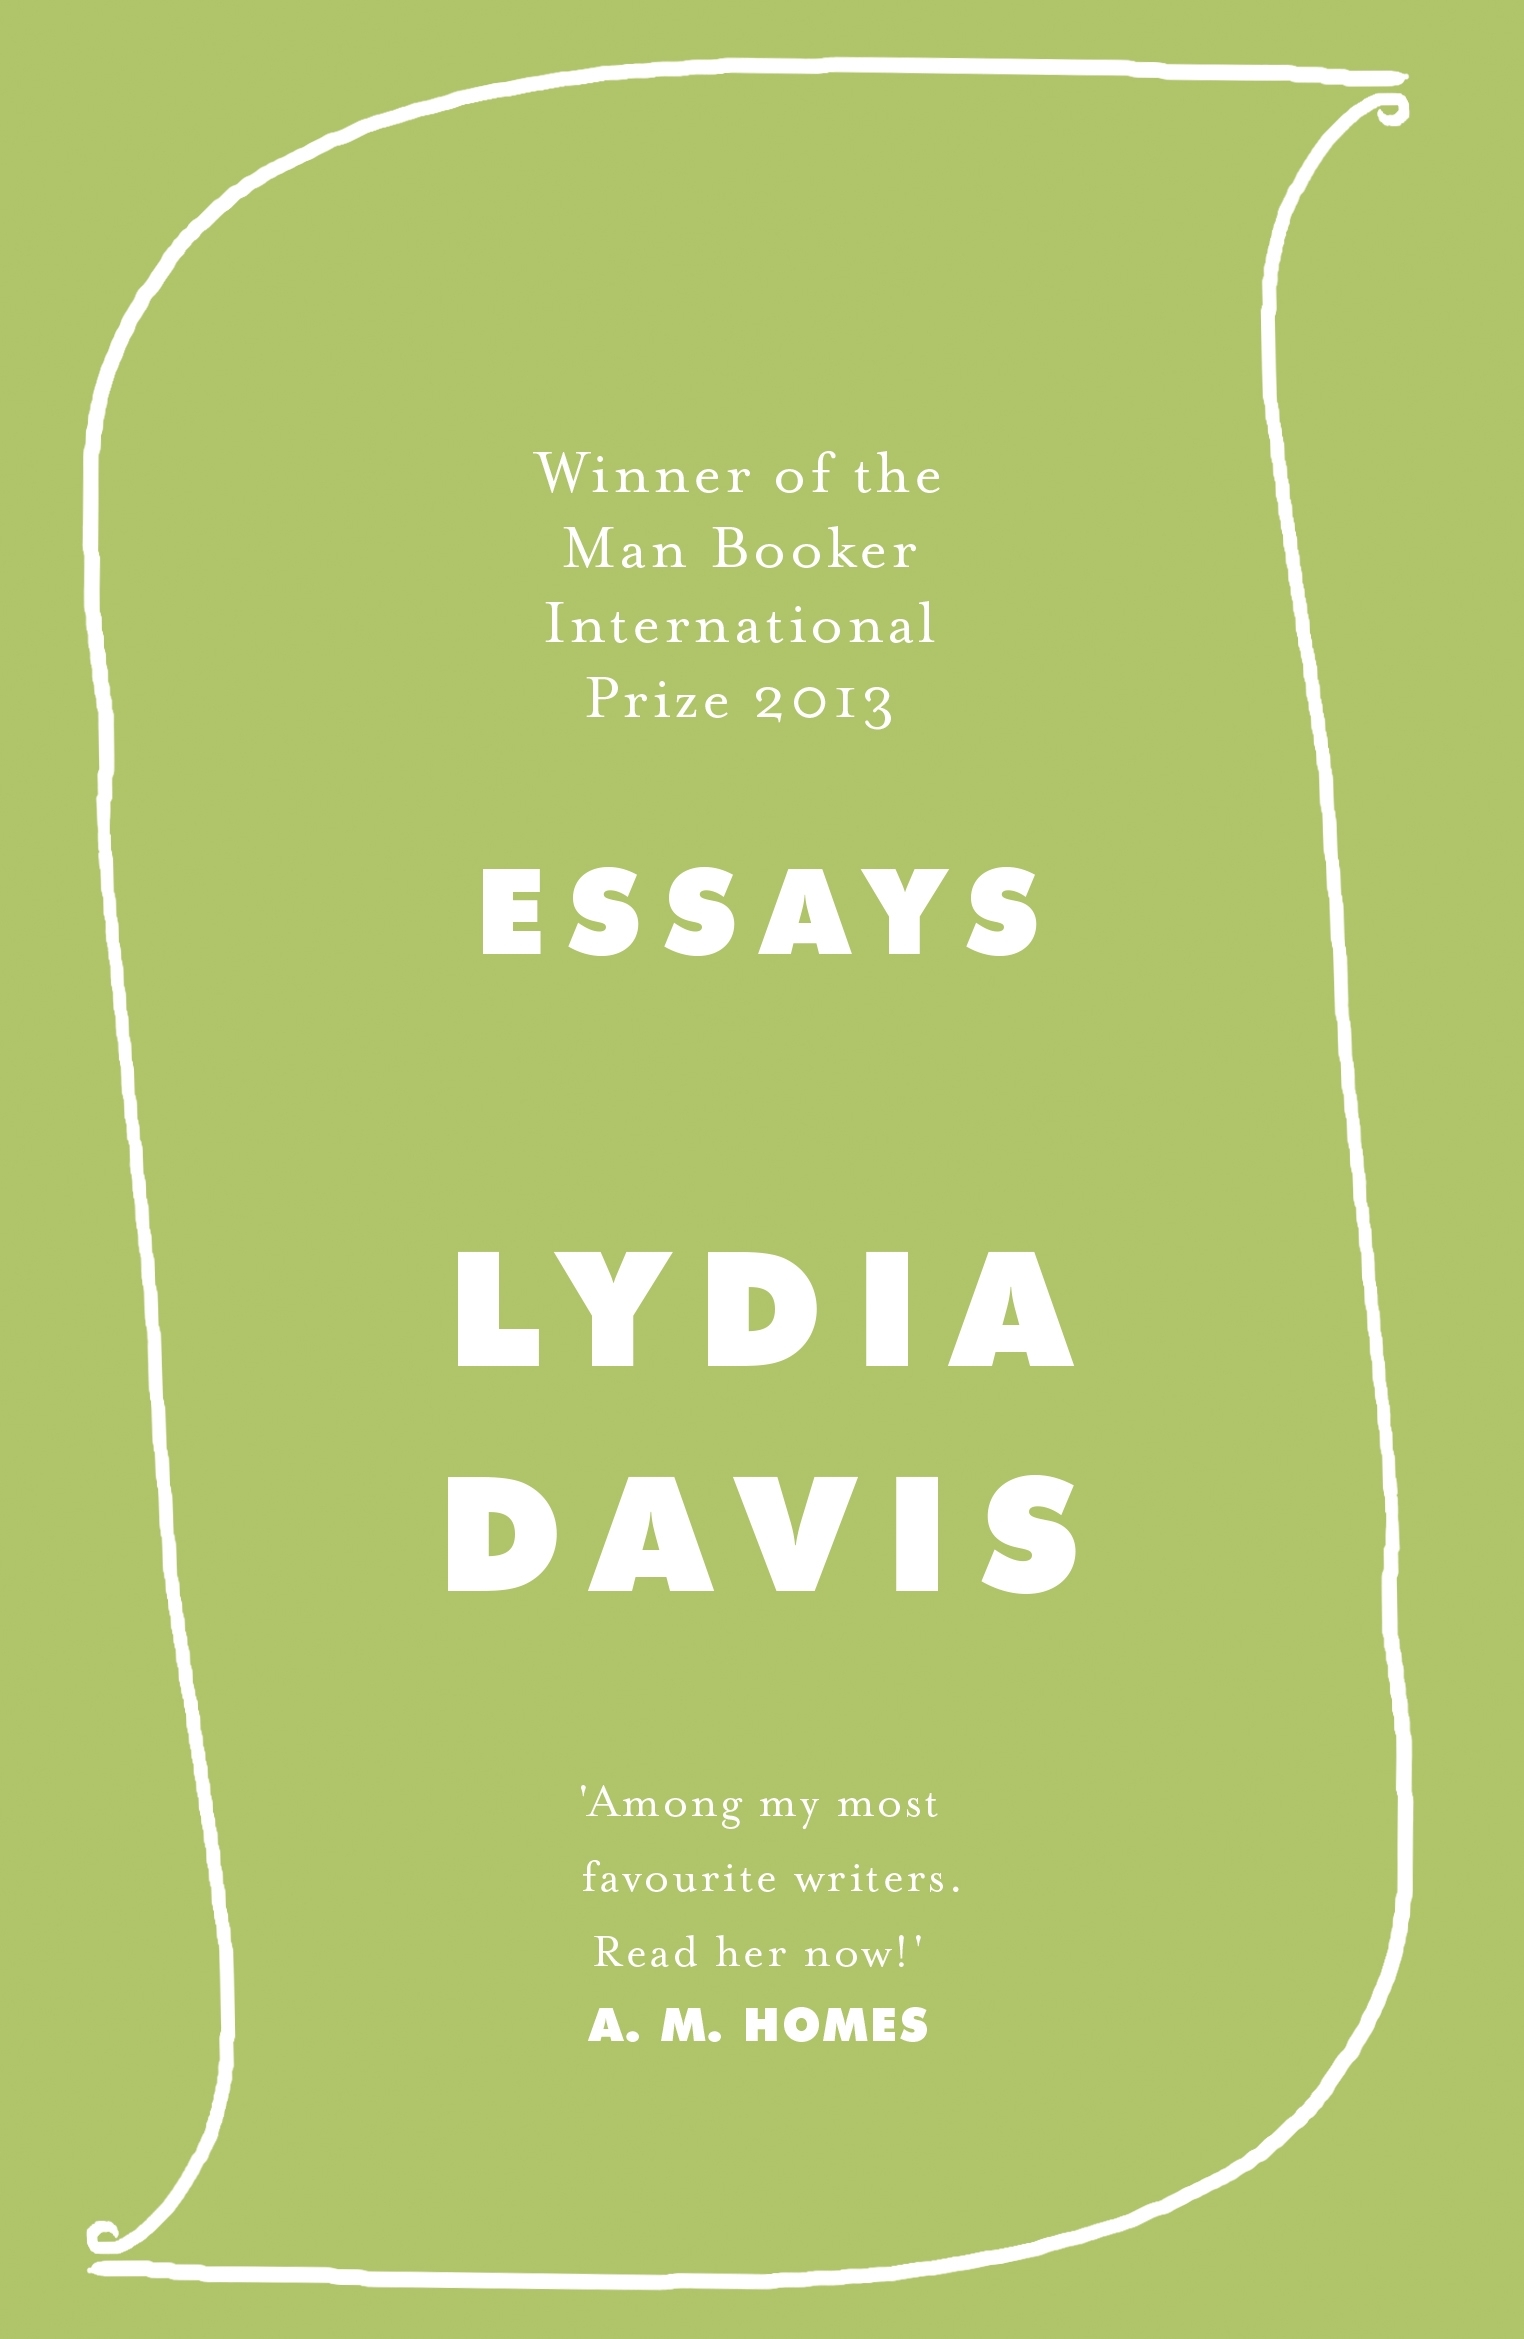 essays two lydia davis